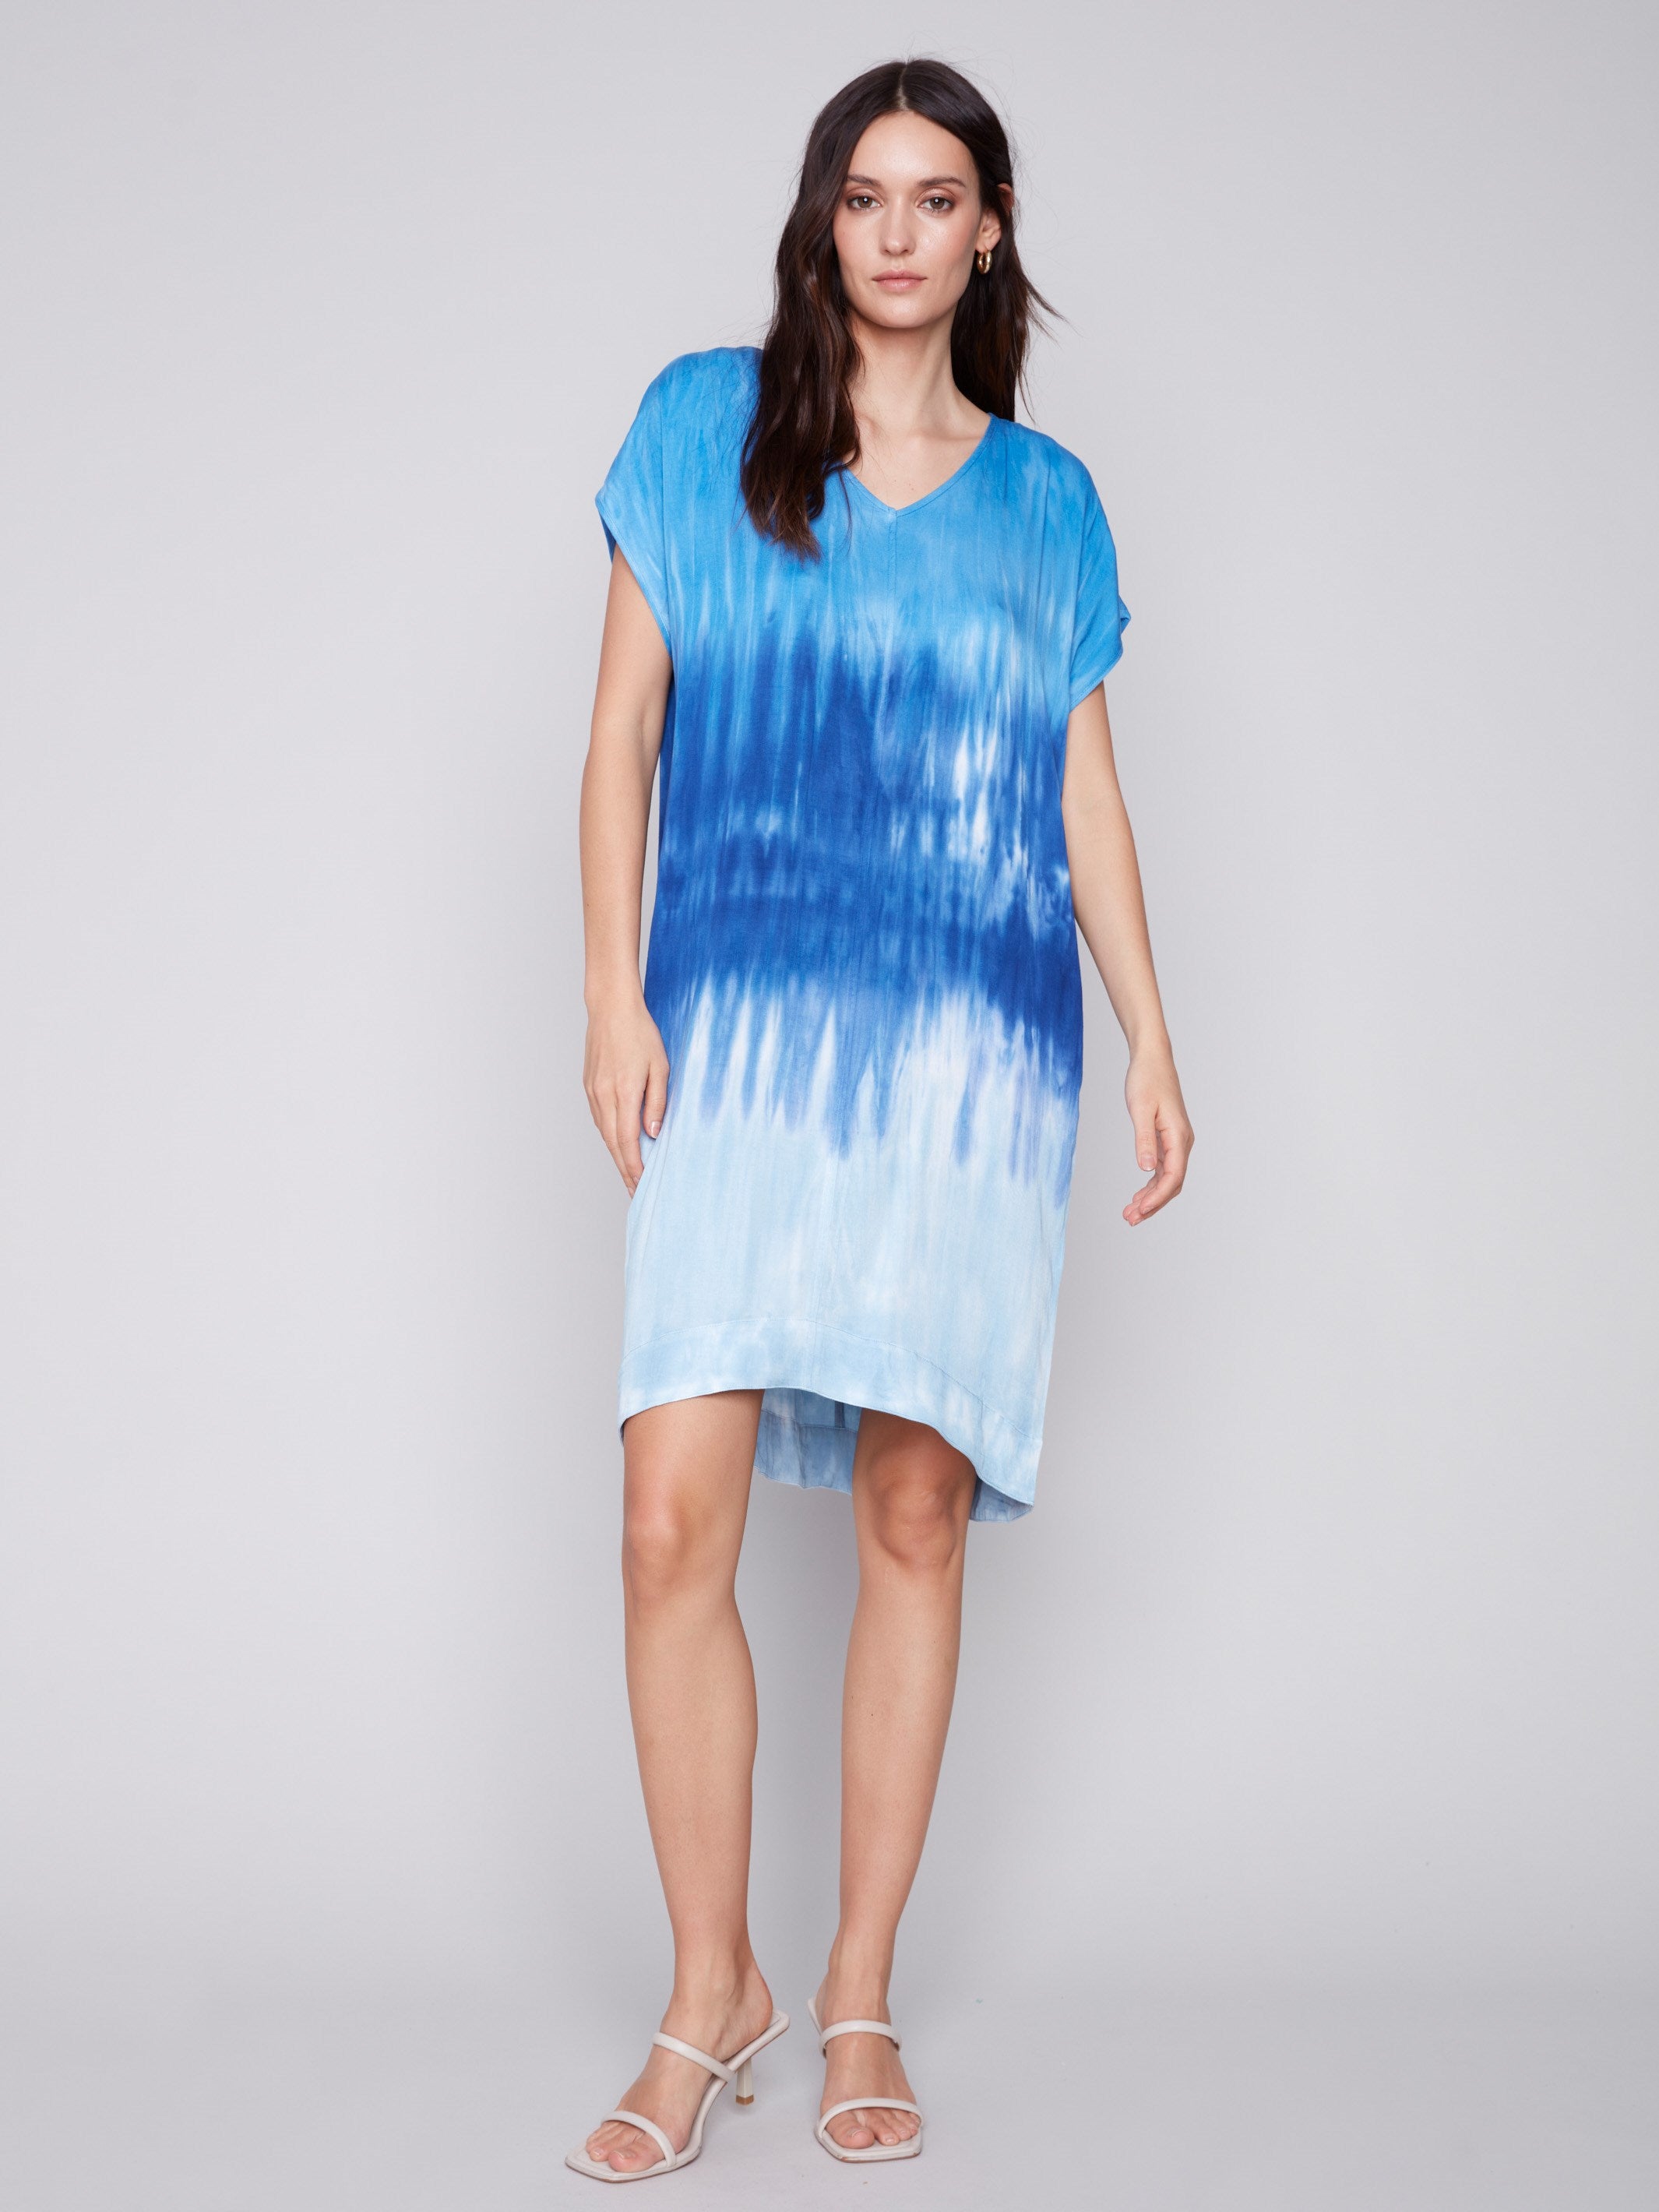 Charlie B Tie-Dye Dress with Dolman Sleeves - Sky - Image 2